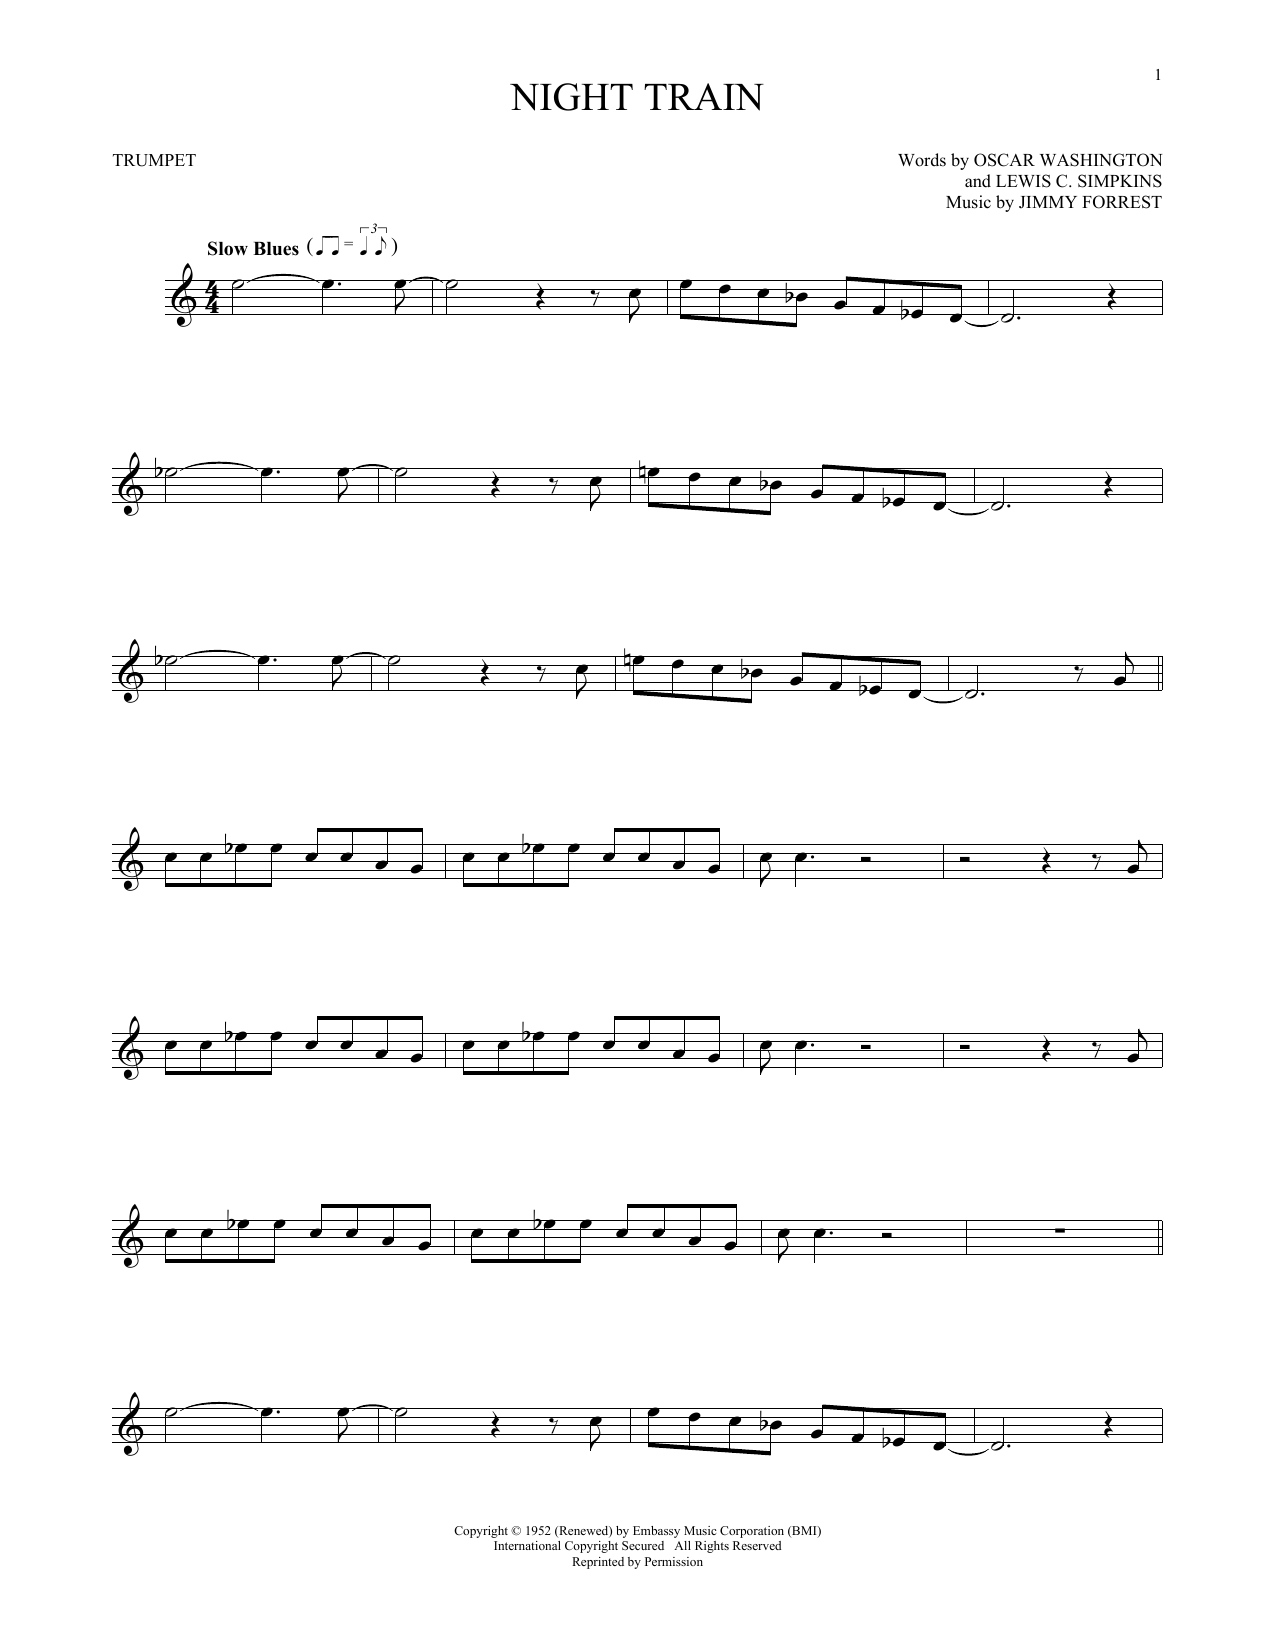 Oscar Washington Night Train Sheet Music Notes & Chords for Alto Saxophone - Download or Print PDF